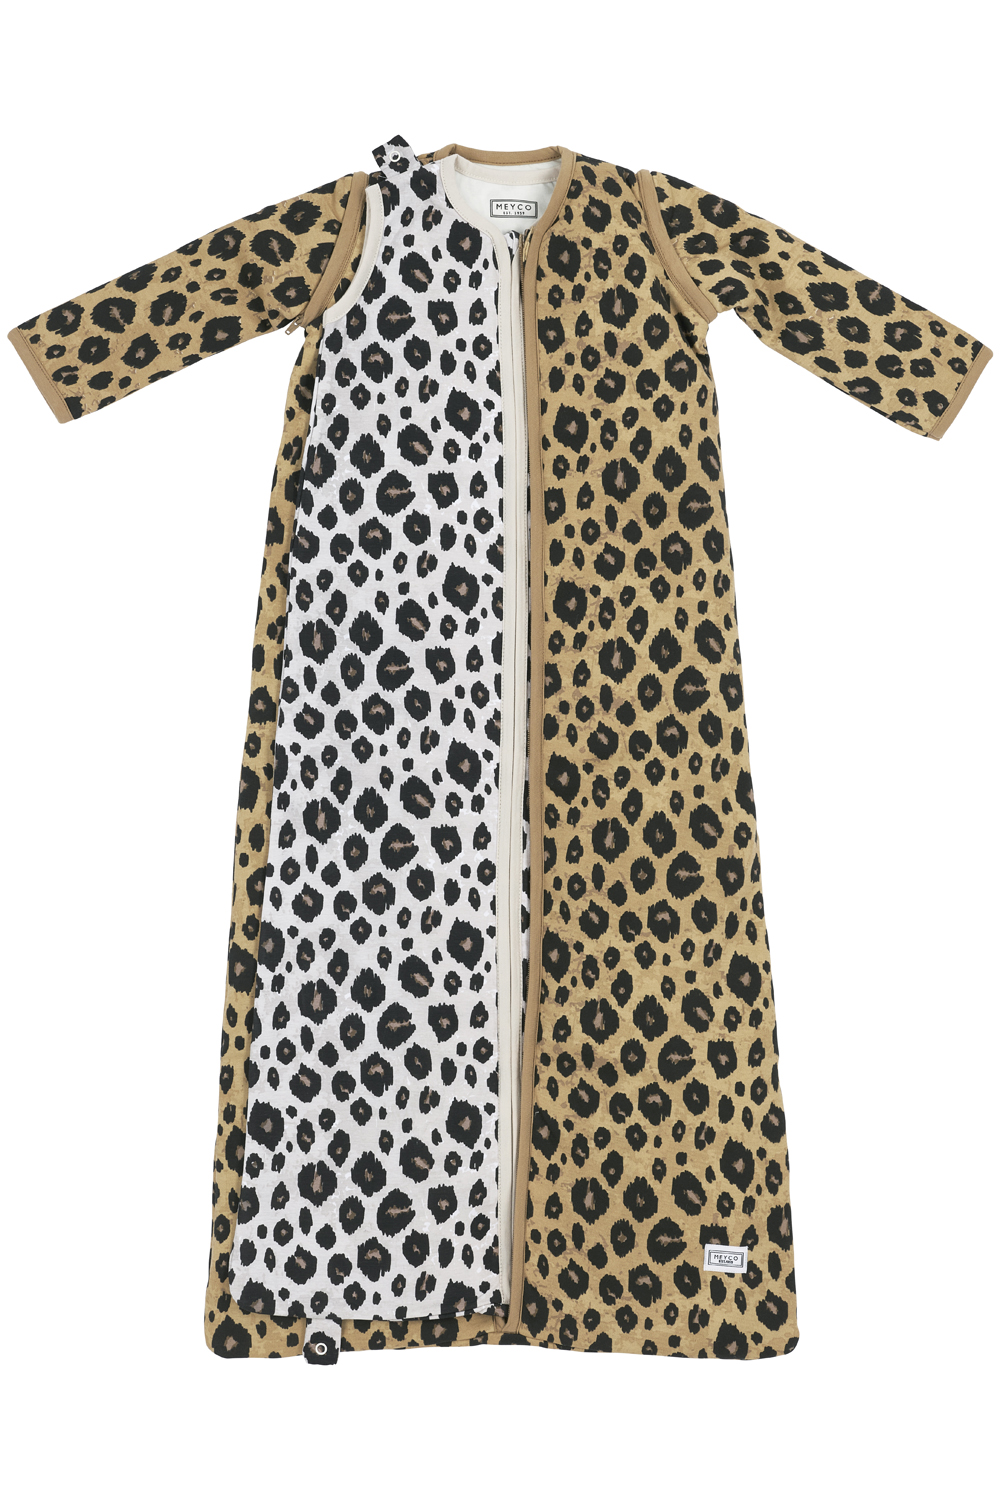 Sleeping bag 4-seasons Leopard - multicolour